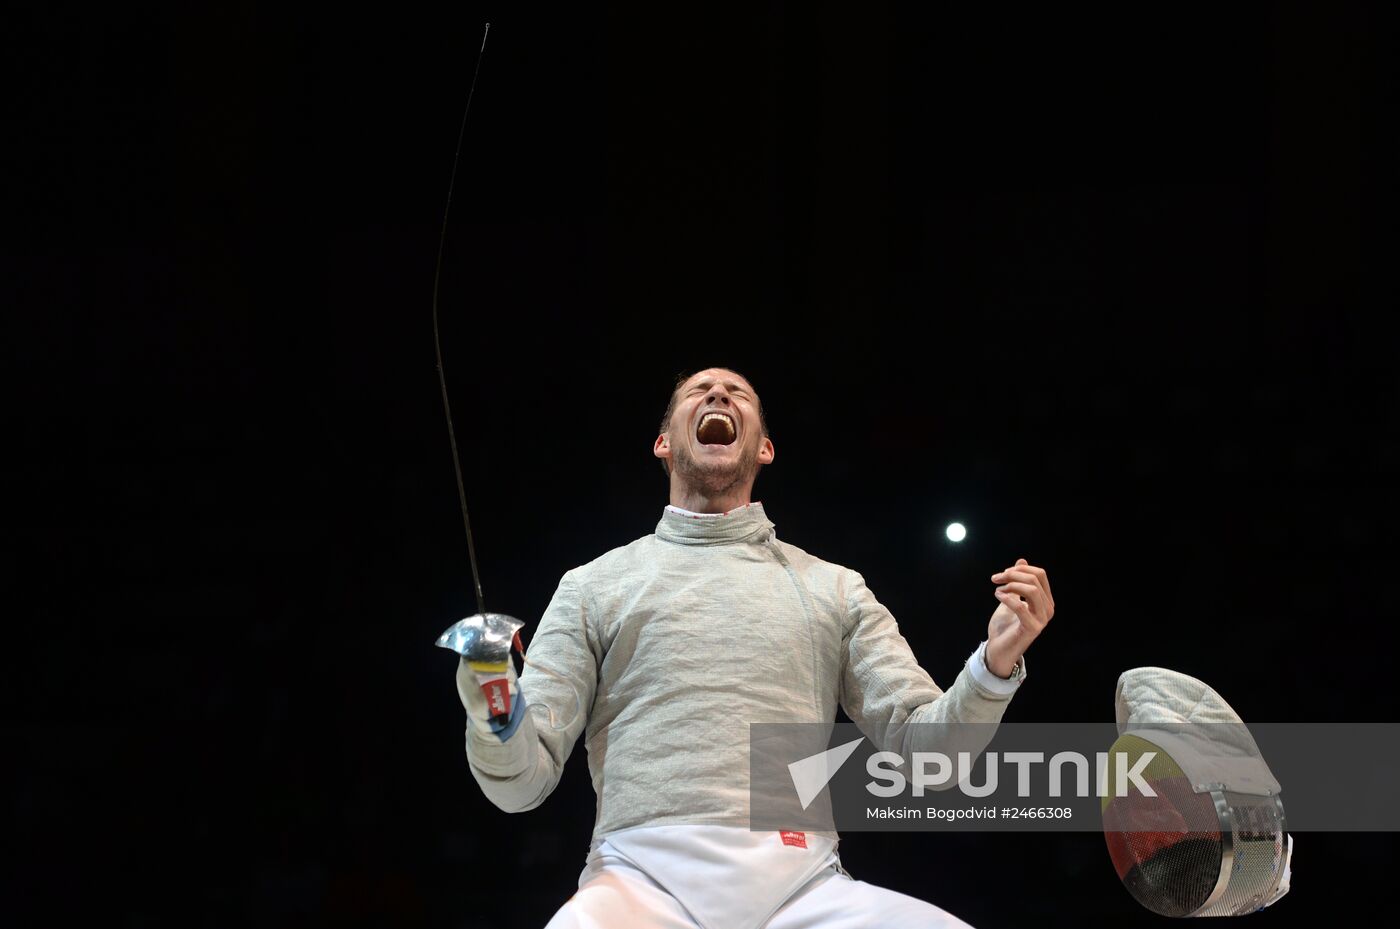 World Fencing Championships 2014 in Kazan. Day seven